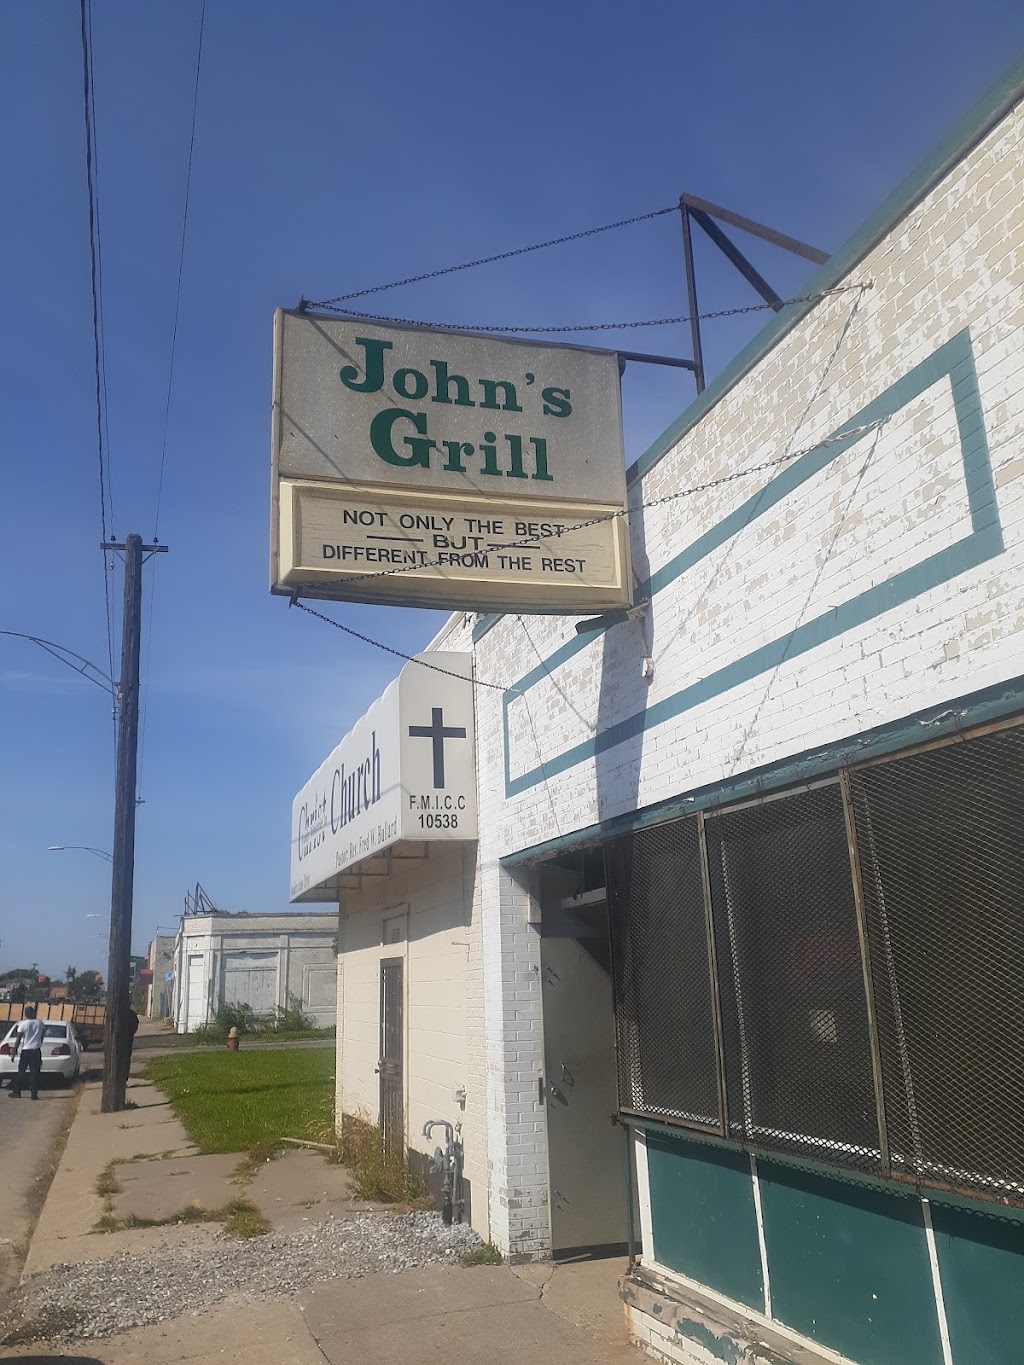 Johns Grill Coney Island | 10534 W Chicago, Detroit, MI 48204, USA | Phone: (313) 933-5733